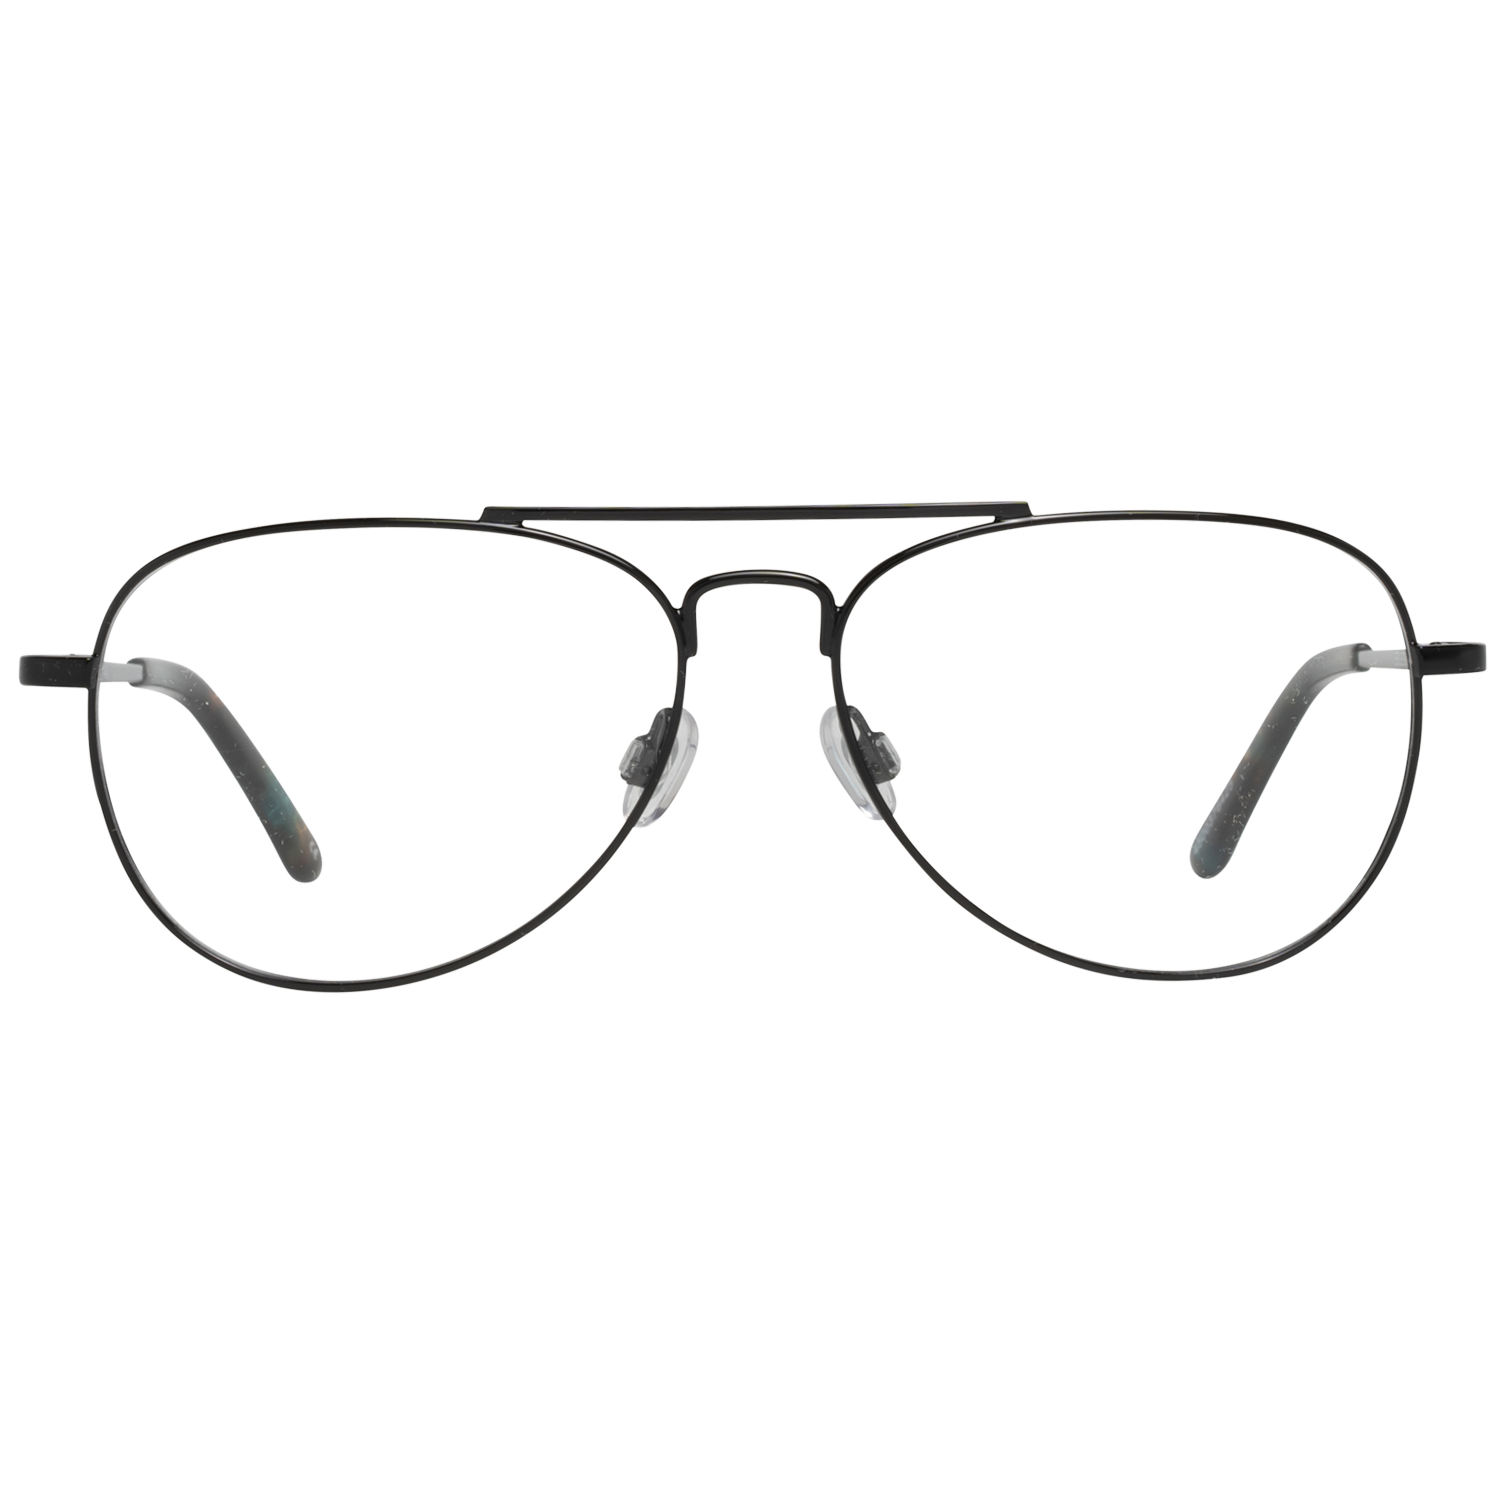 Roxy Frames Roxy Glasses Optical Frame ERJEG03043 DBLK 55 Eyeglasses Eyewear UK USA Australia 